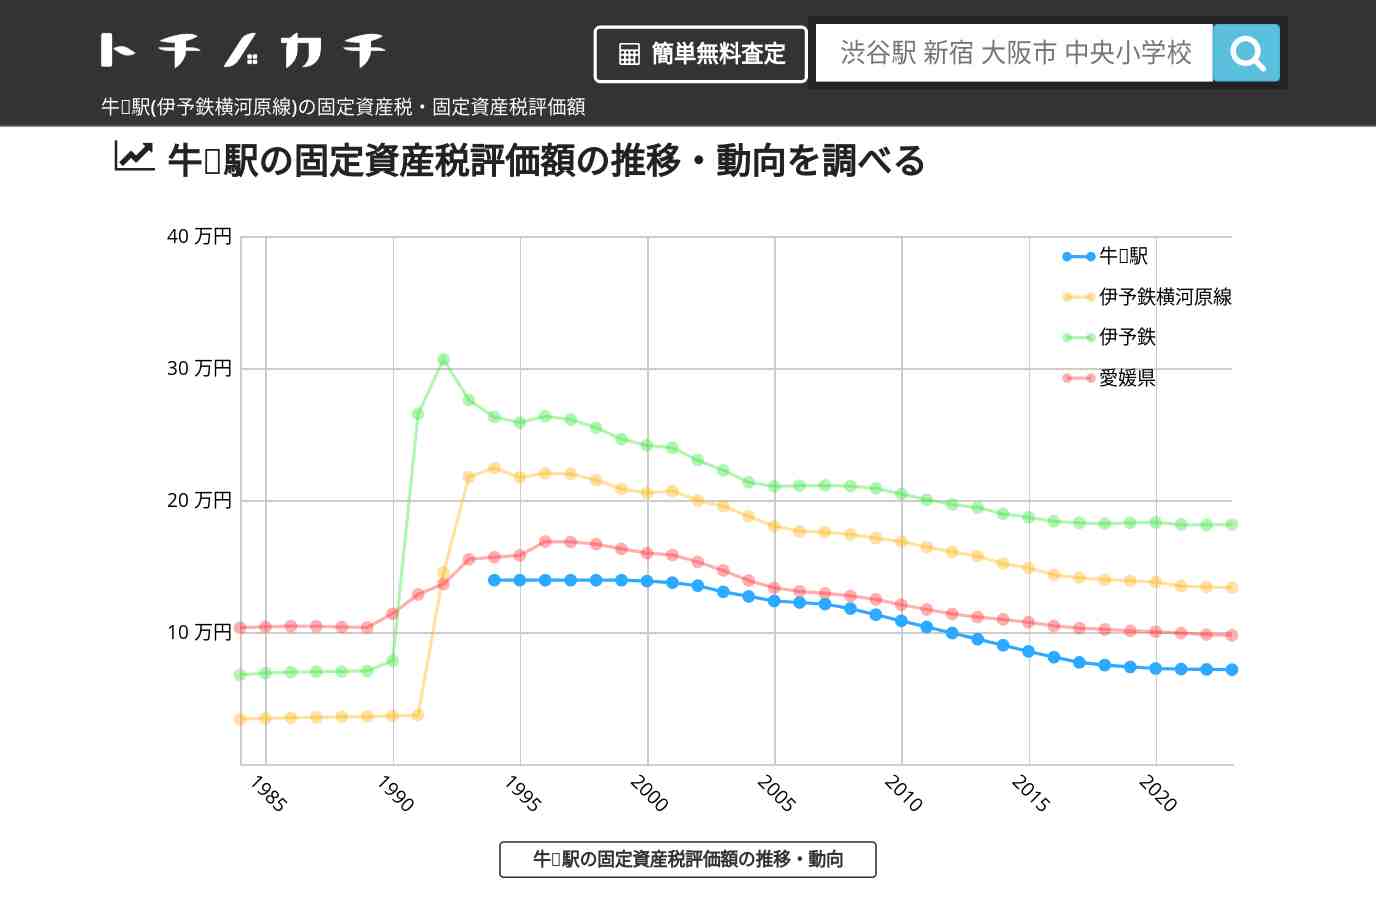 牛渕駅(伊予鉄横河原線)の固定資産税・固定資産税評価額 | トチノカチ